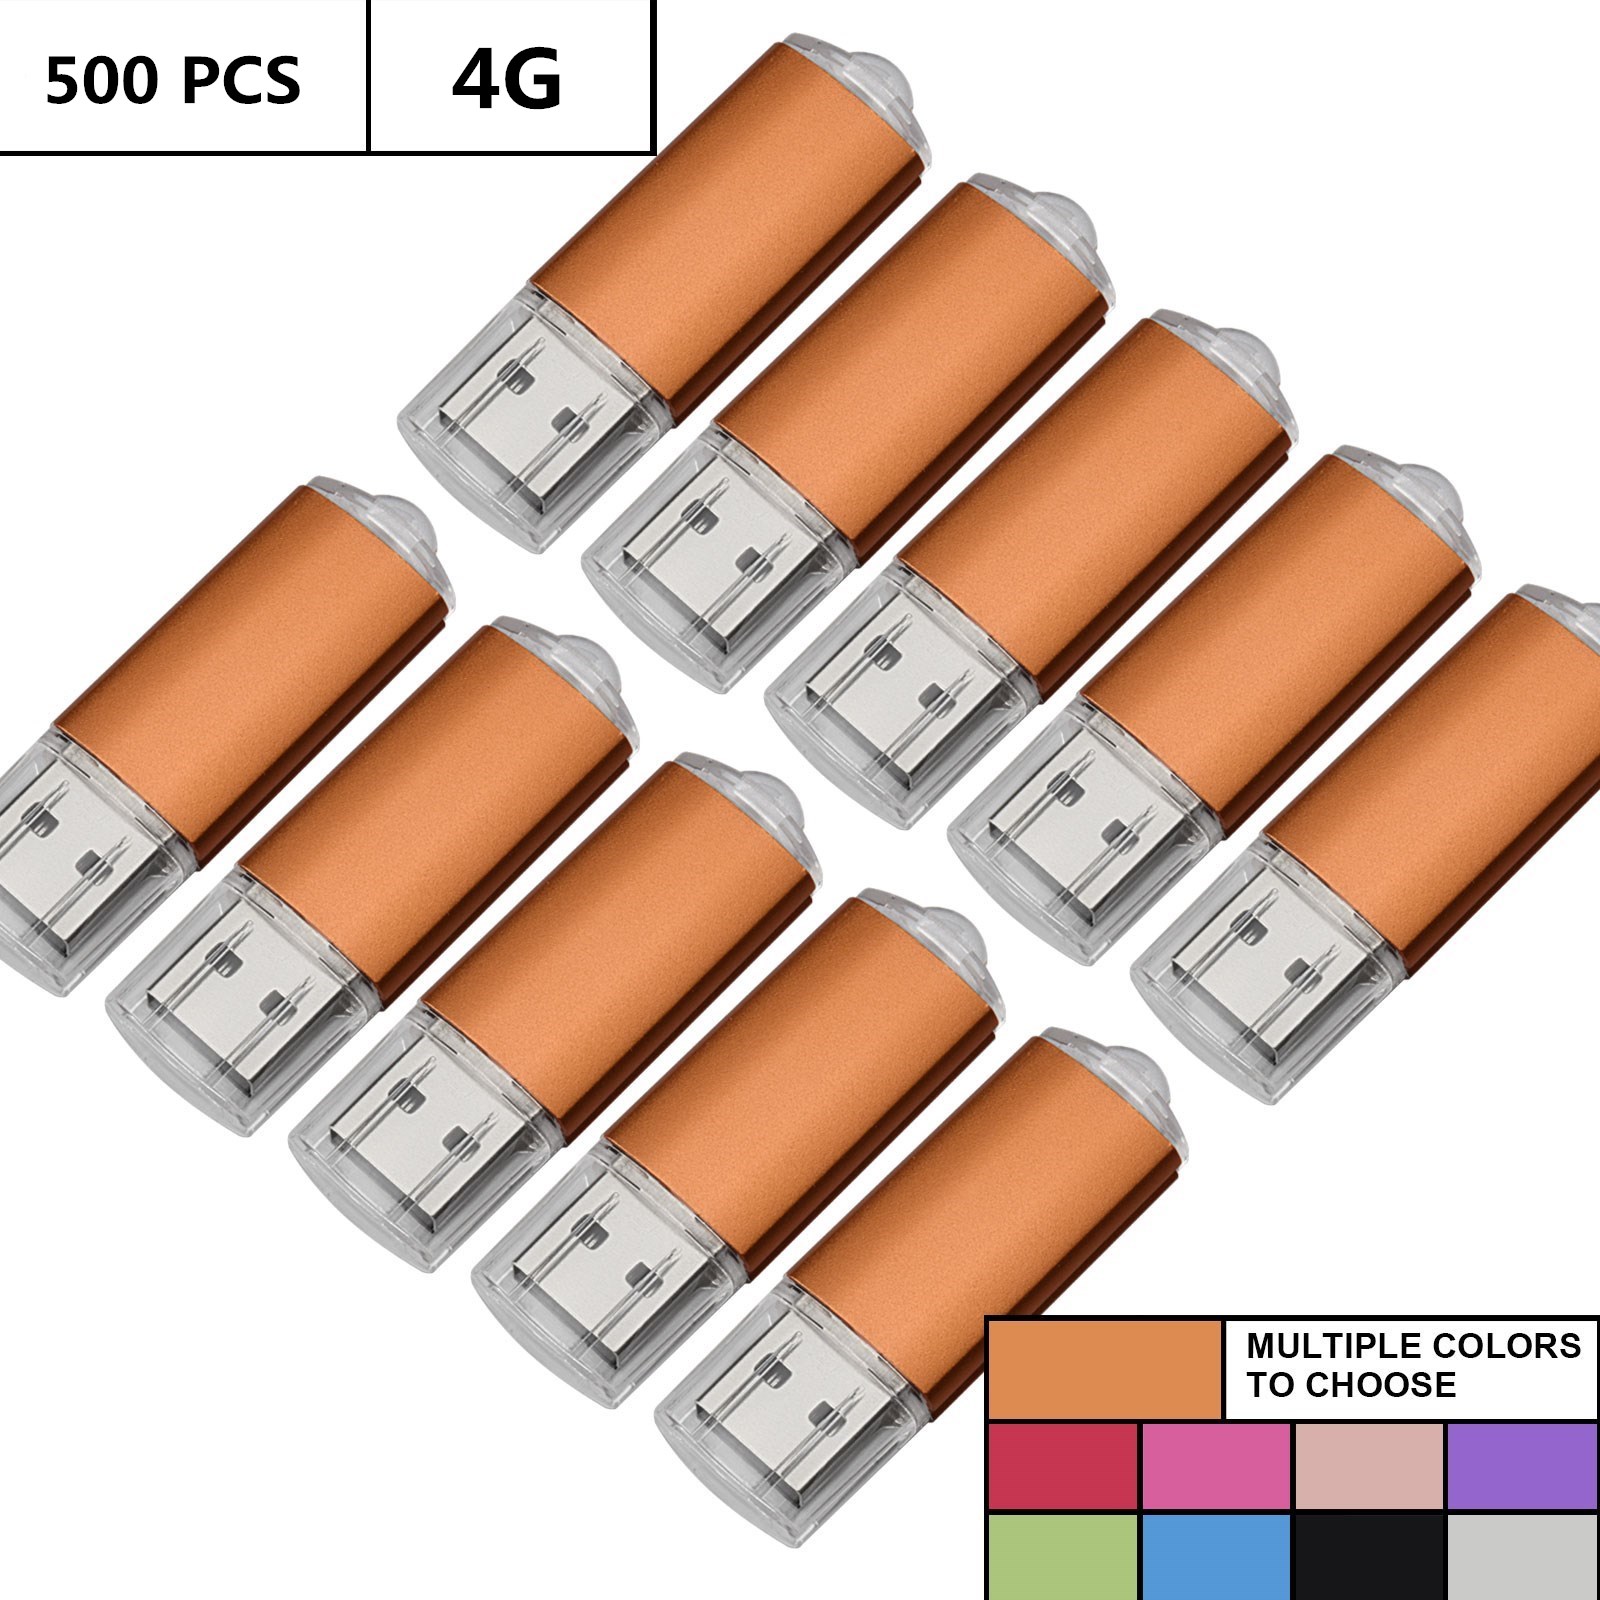 All'ingrosso Bulk all'ingrosso 500pcs da 4 GB USB Flash Drive Rettangolo Flash Pen Drive Memory Sticks Archivia